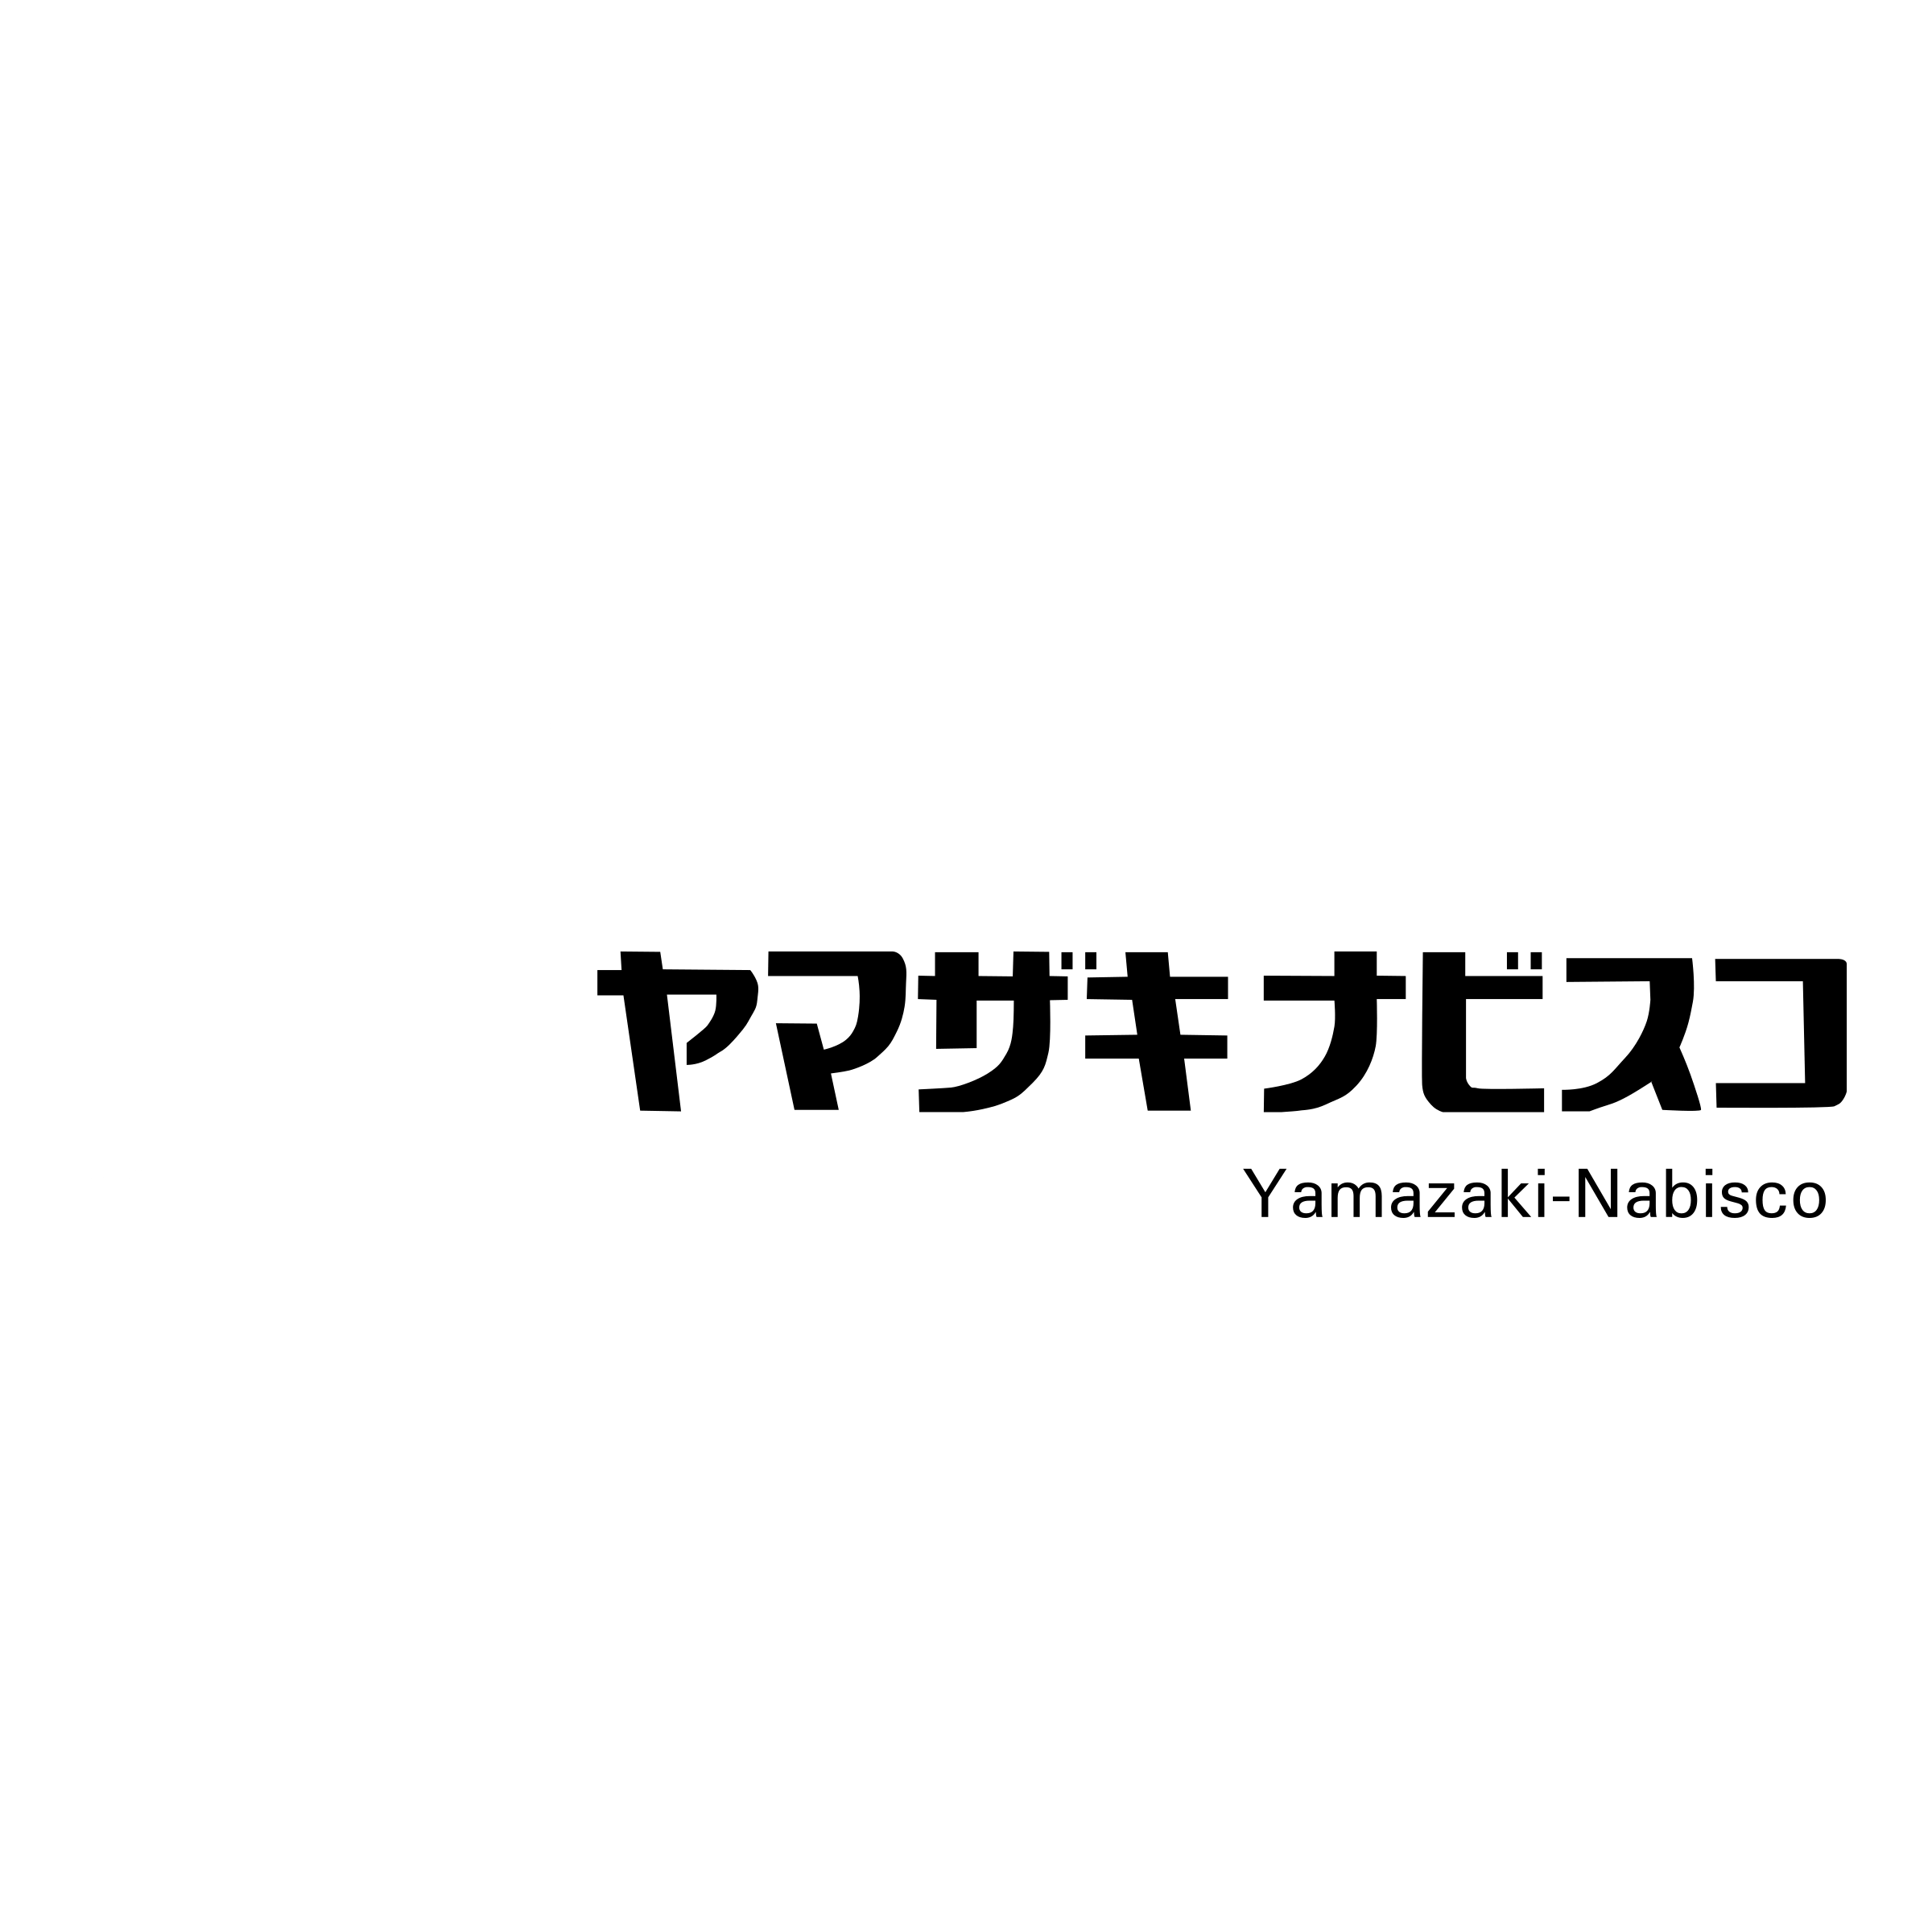 Nabisco Logo - Yamazaki Nabisco Logo PNG Transparent & SVG Vector